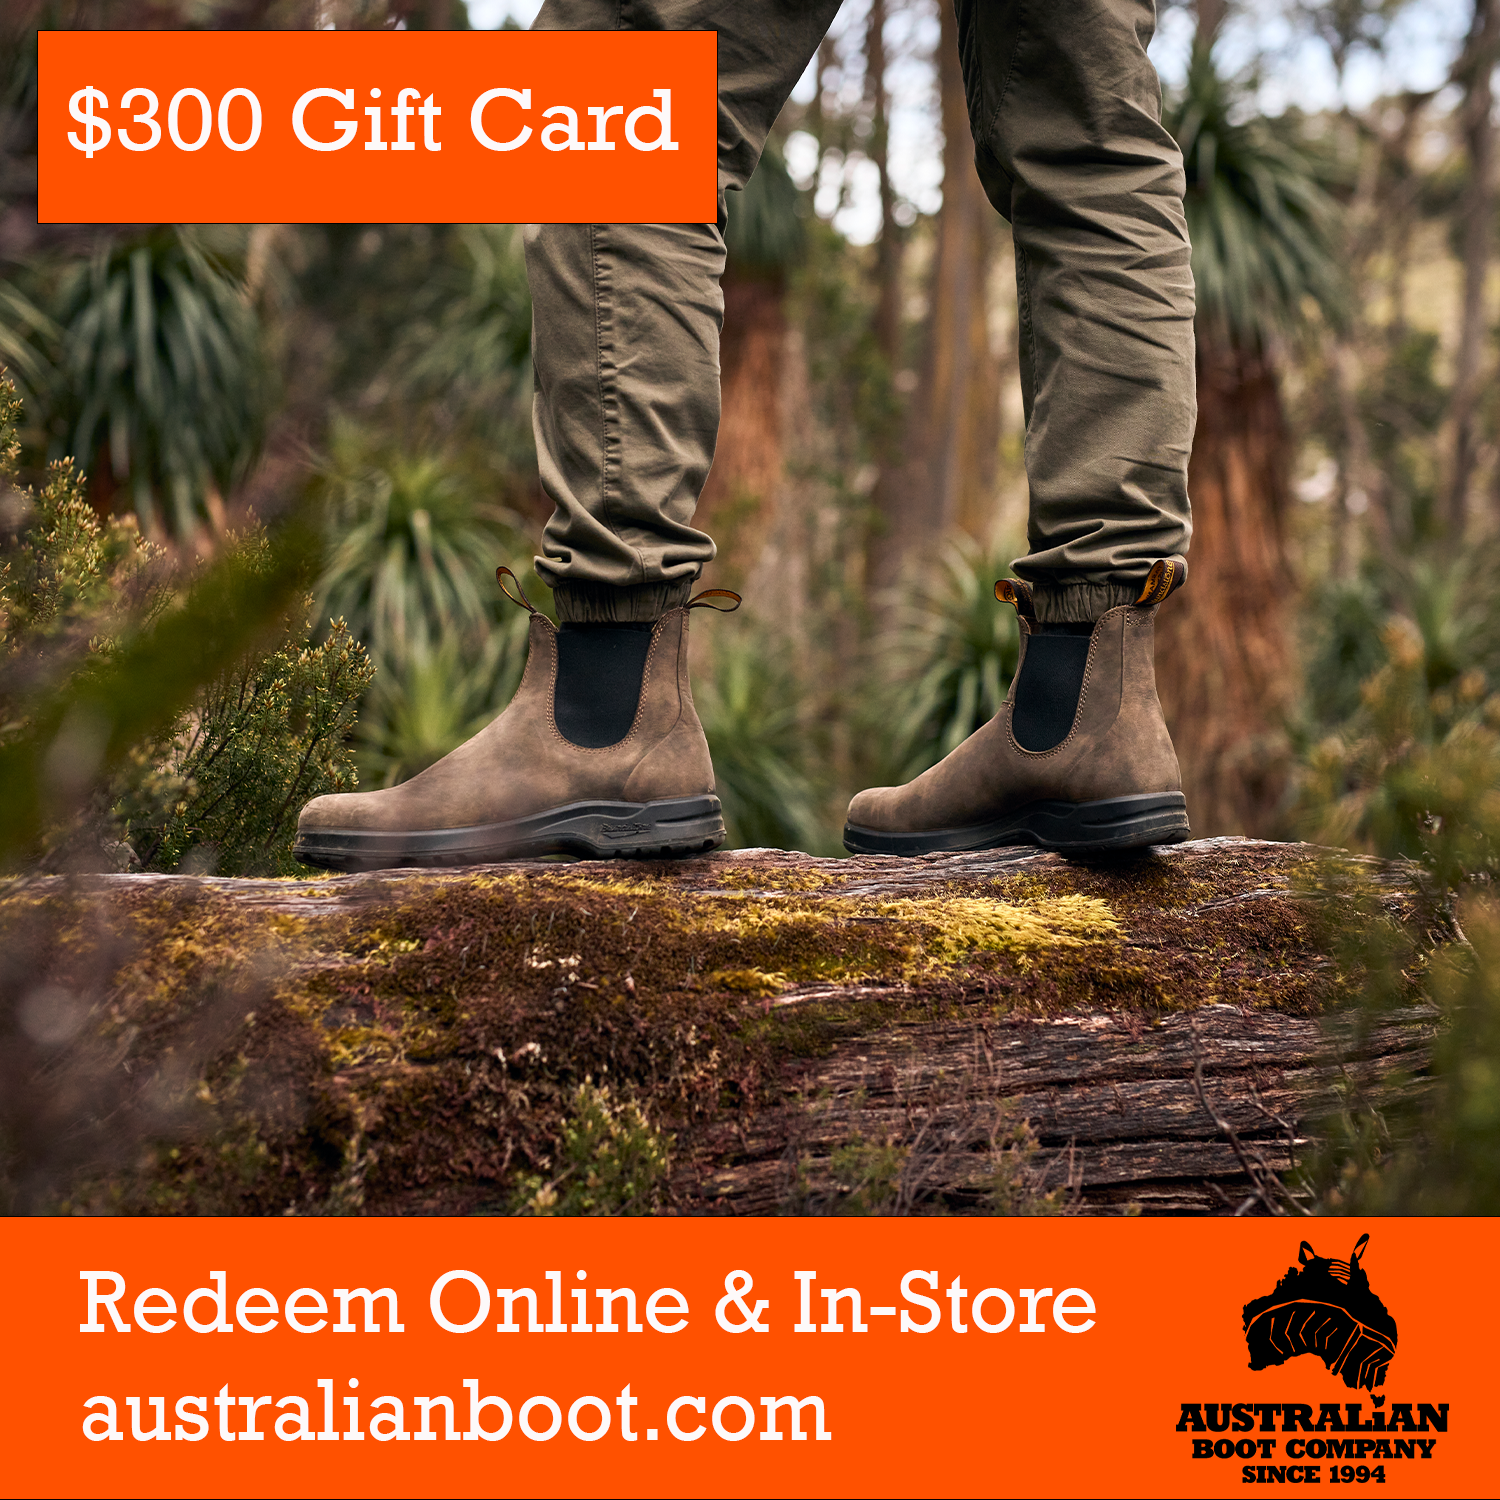 Australian Boot Company $300 Gift Card